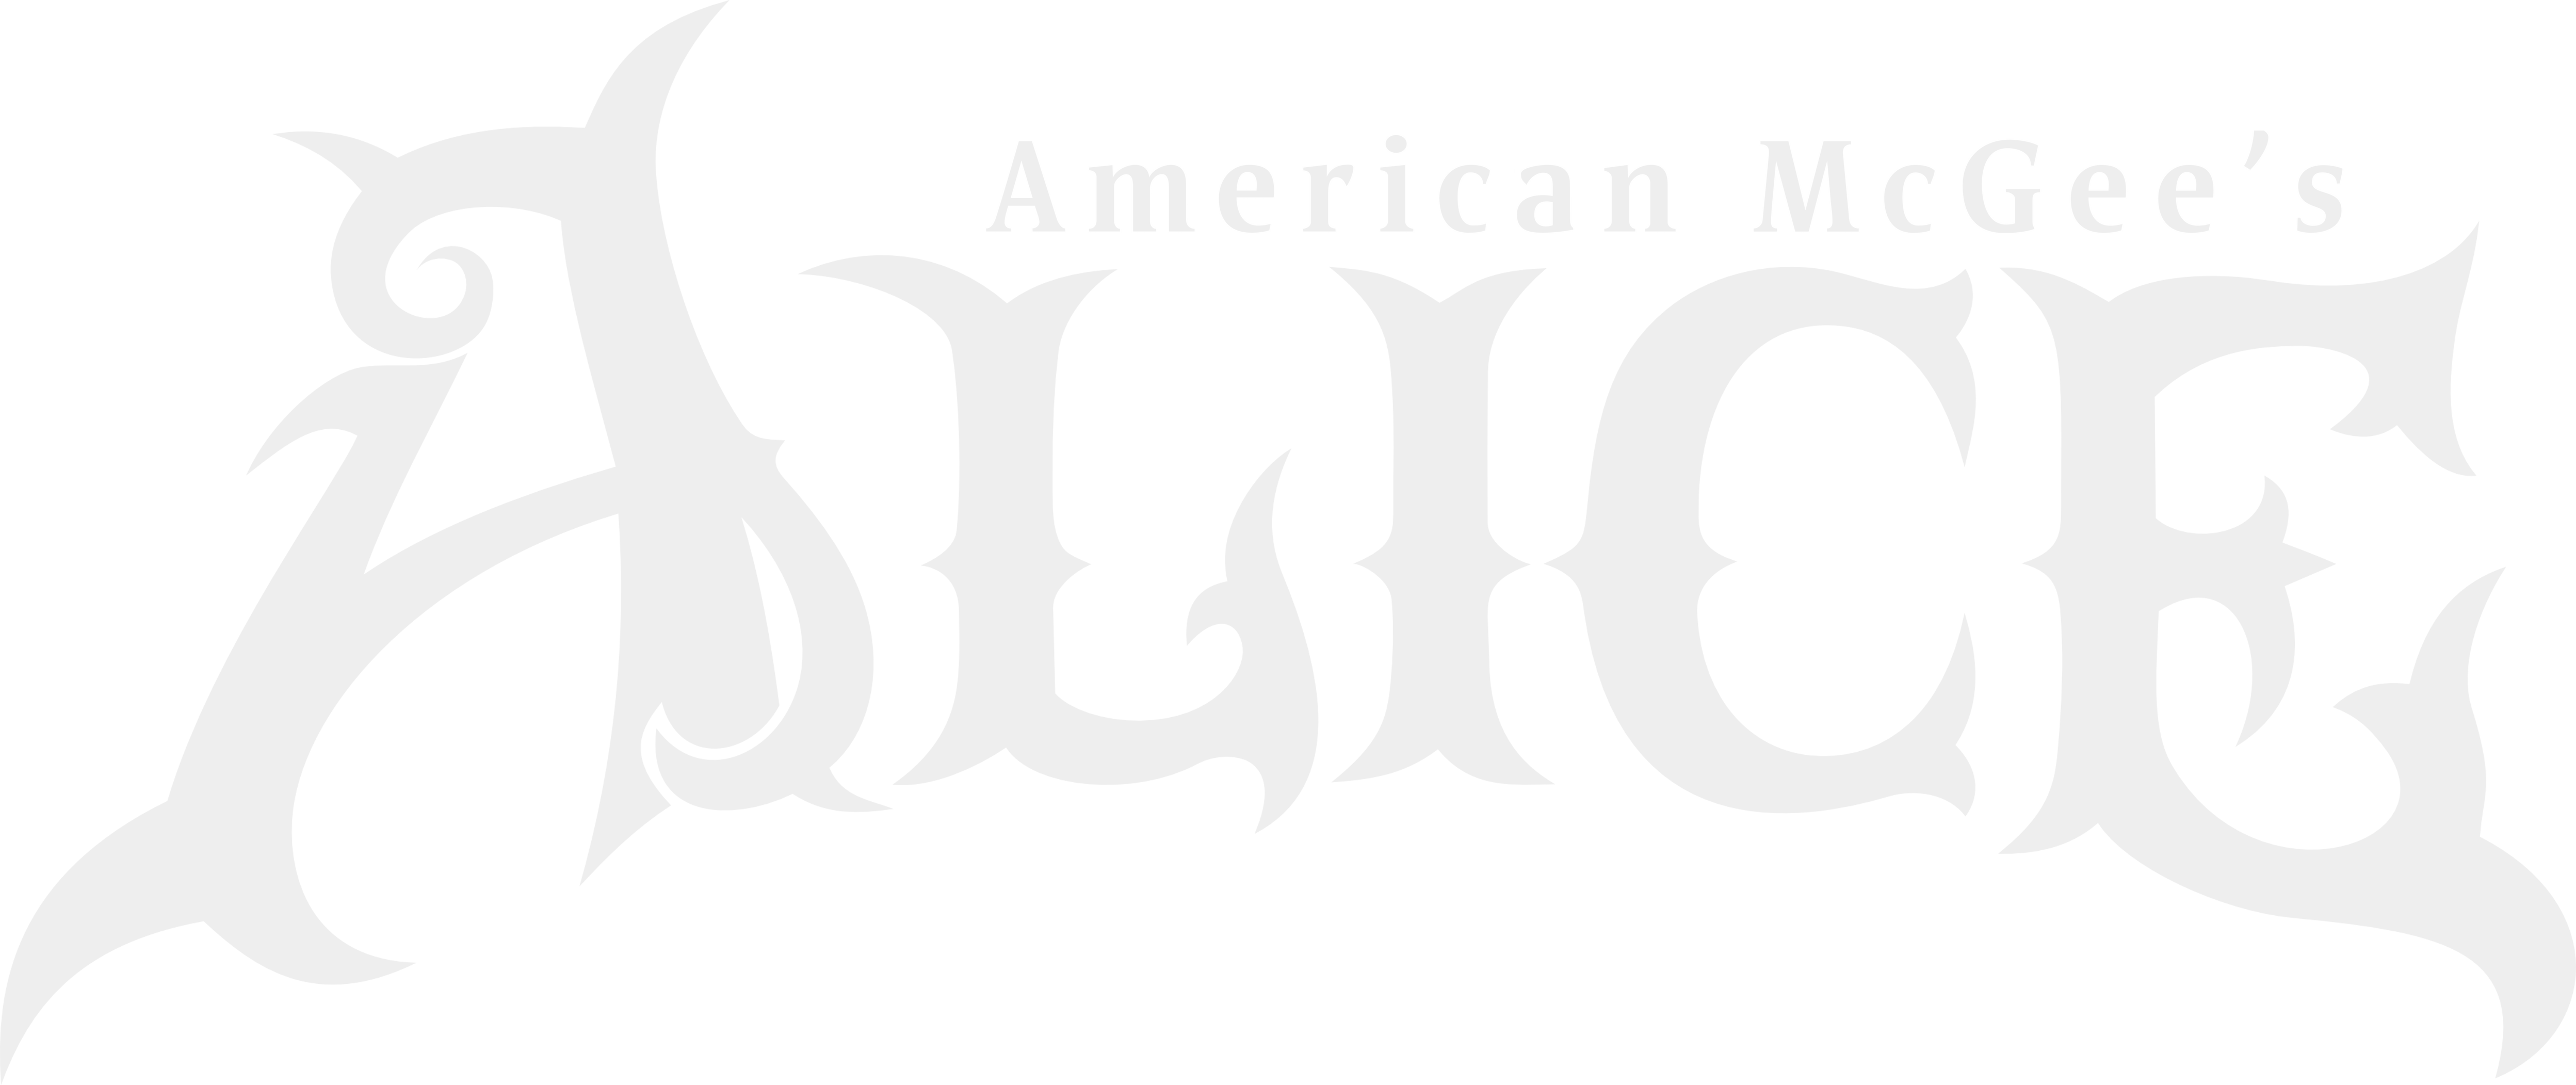 American McGee’s Alice